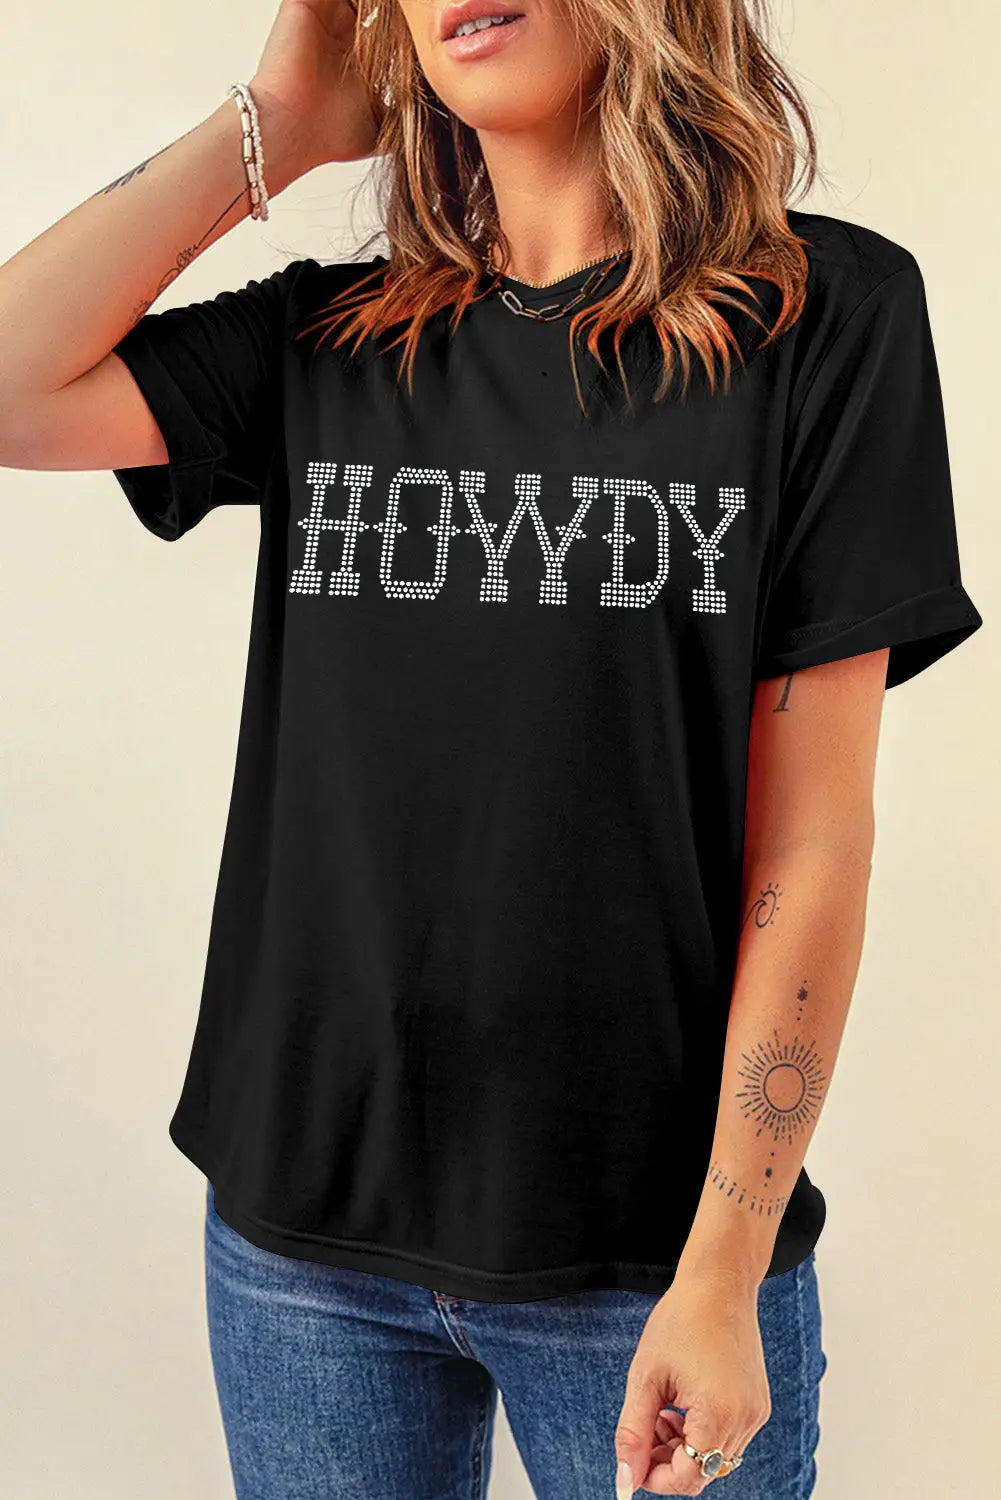 Black howdy rhinestone slim fit crew neck t shirt - graphic t-shirts